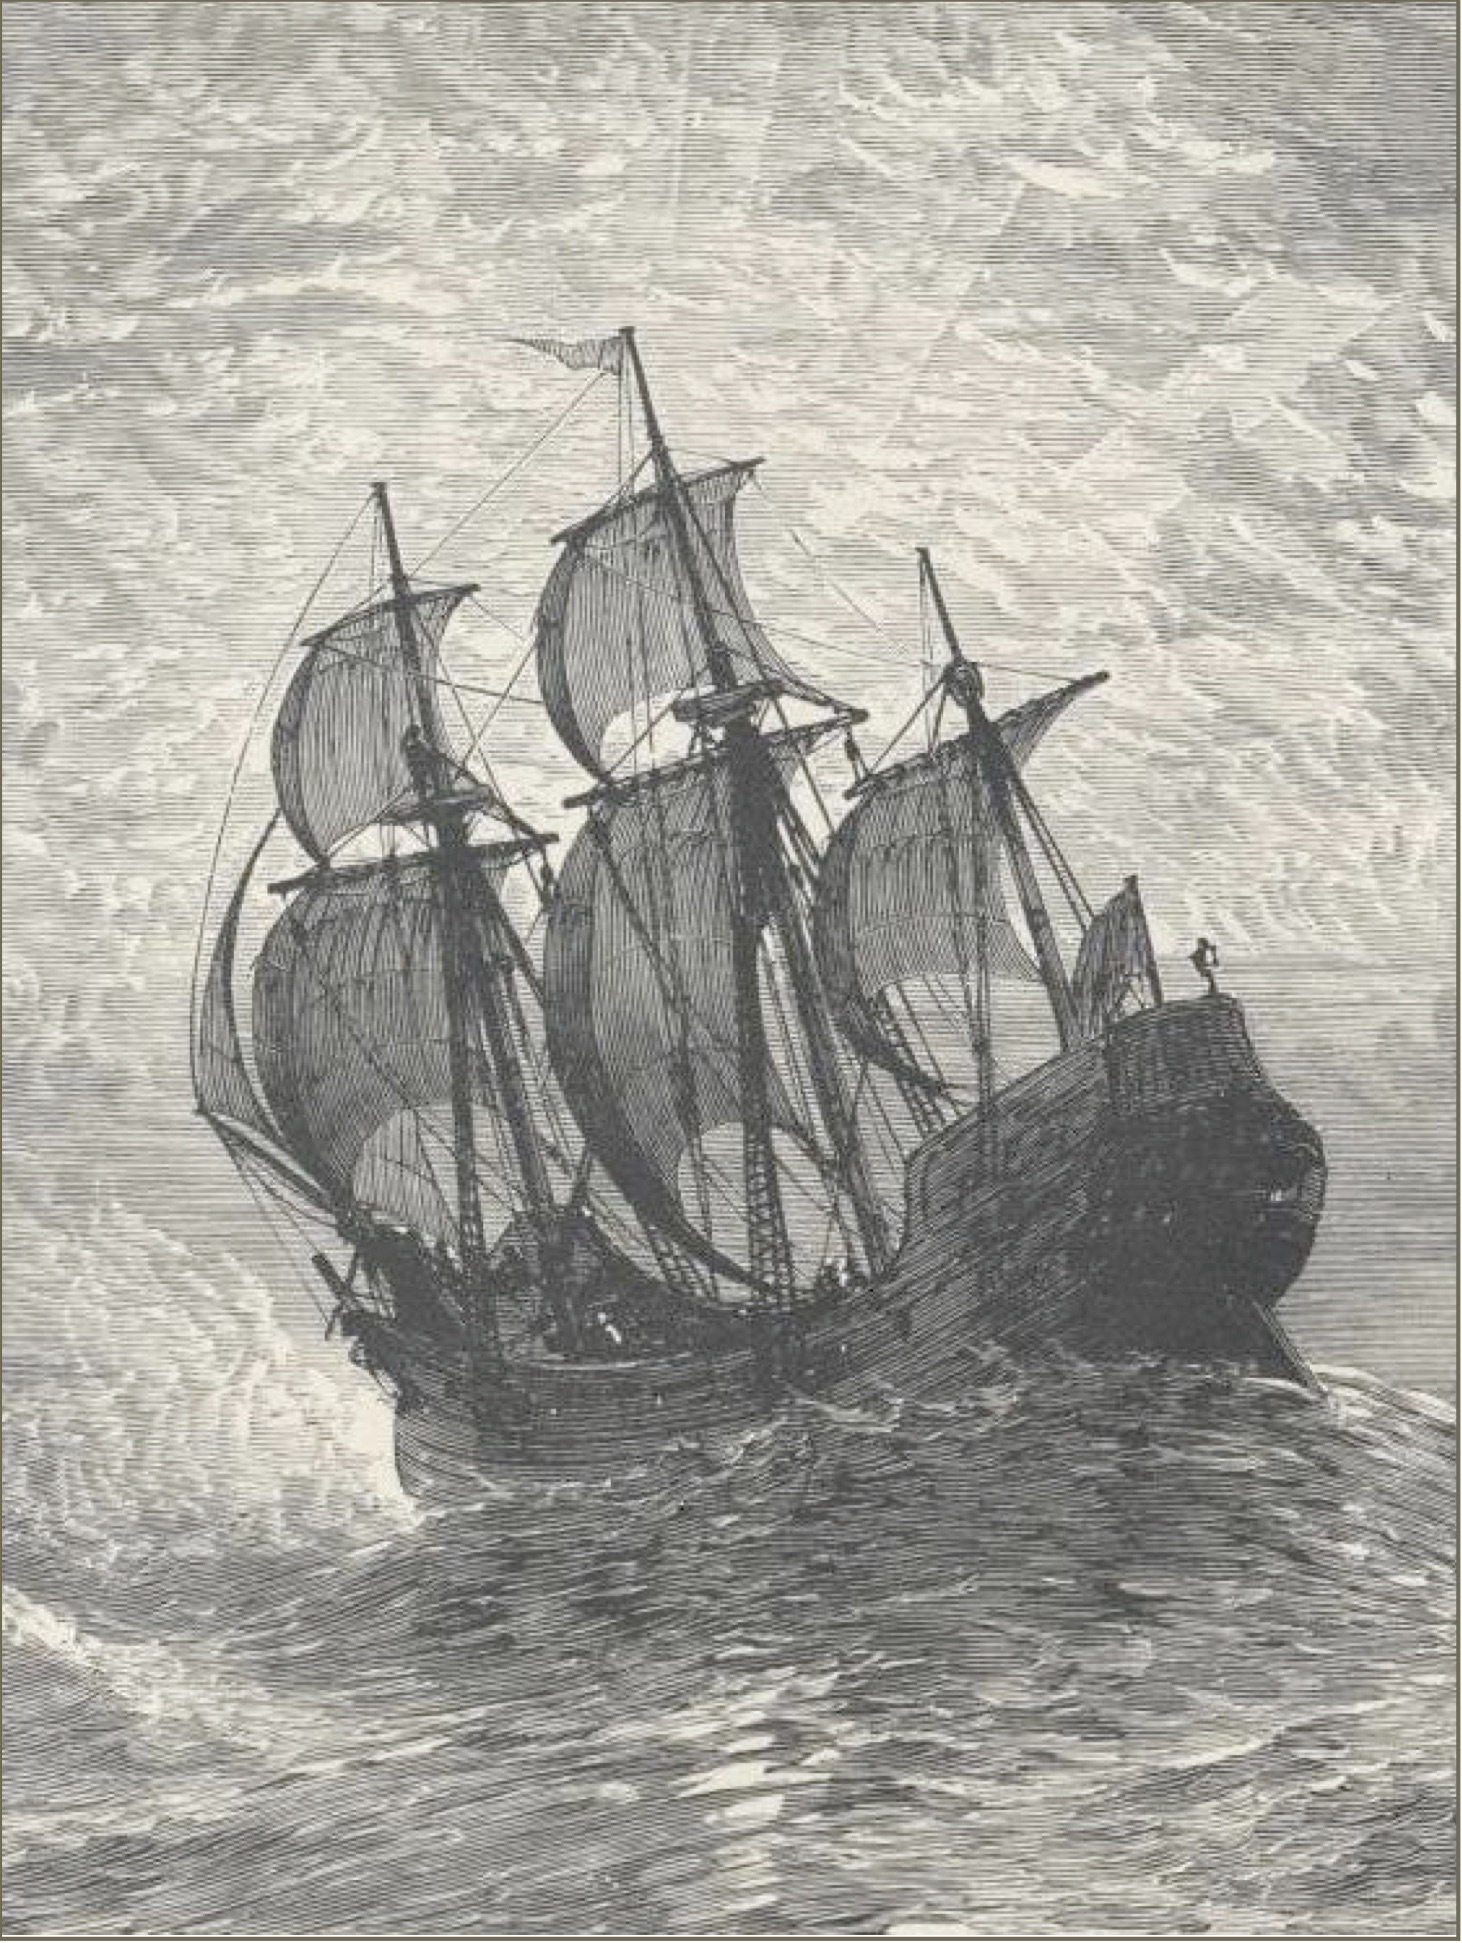 Engraving of the Mayflower